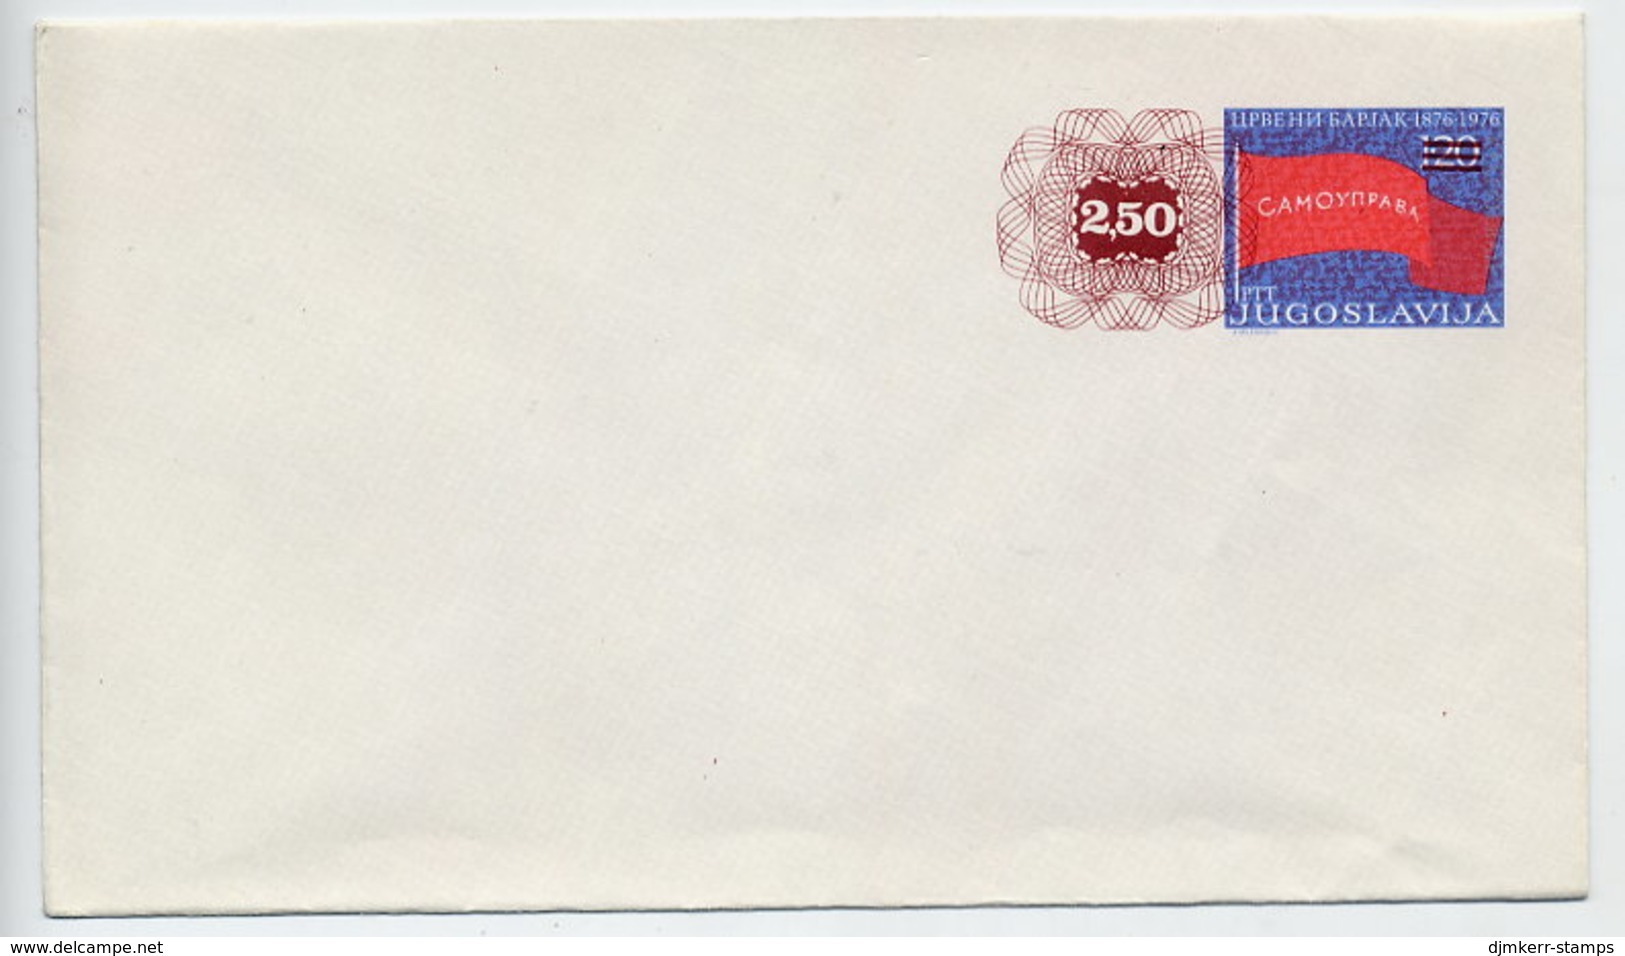 YUGOSLAVIA 1980 2.50 Surcharge On Red Flag Centenary Envelope Unused. Michel U87 II - Postal Stationery